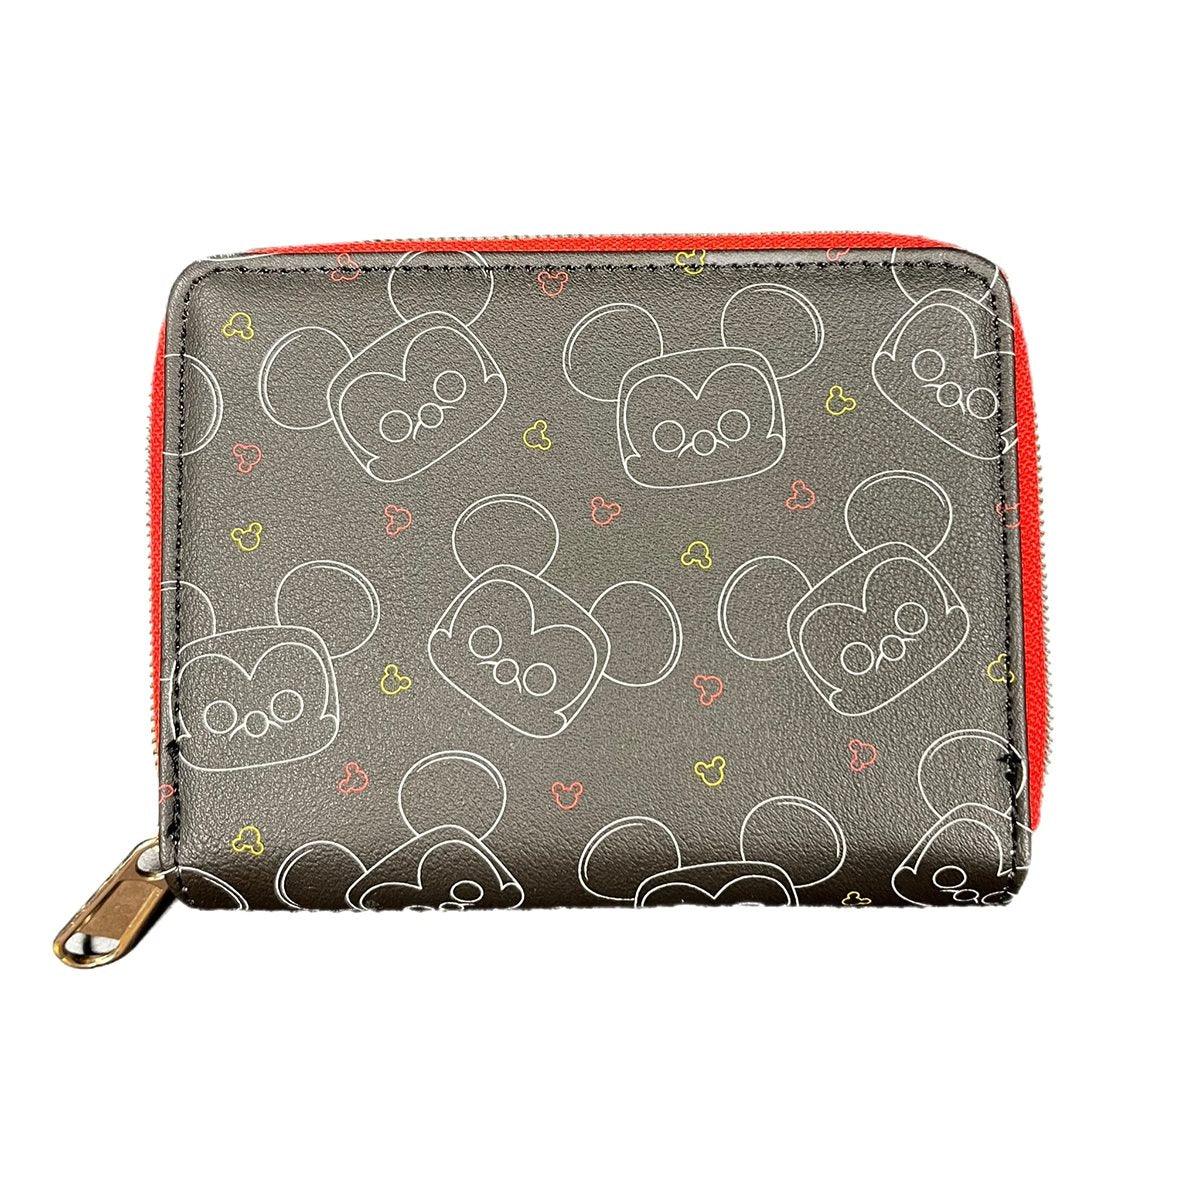 Funko Disney Mickey Mouse Head Print Zip-Around Wallet